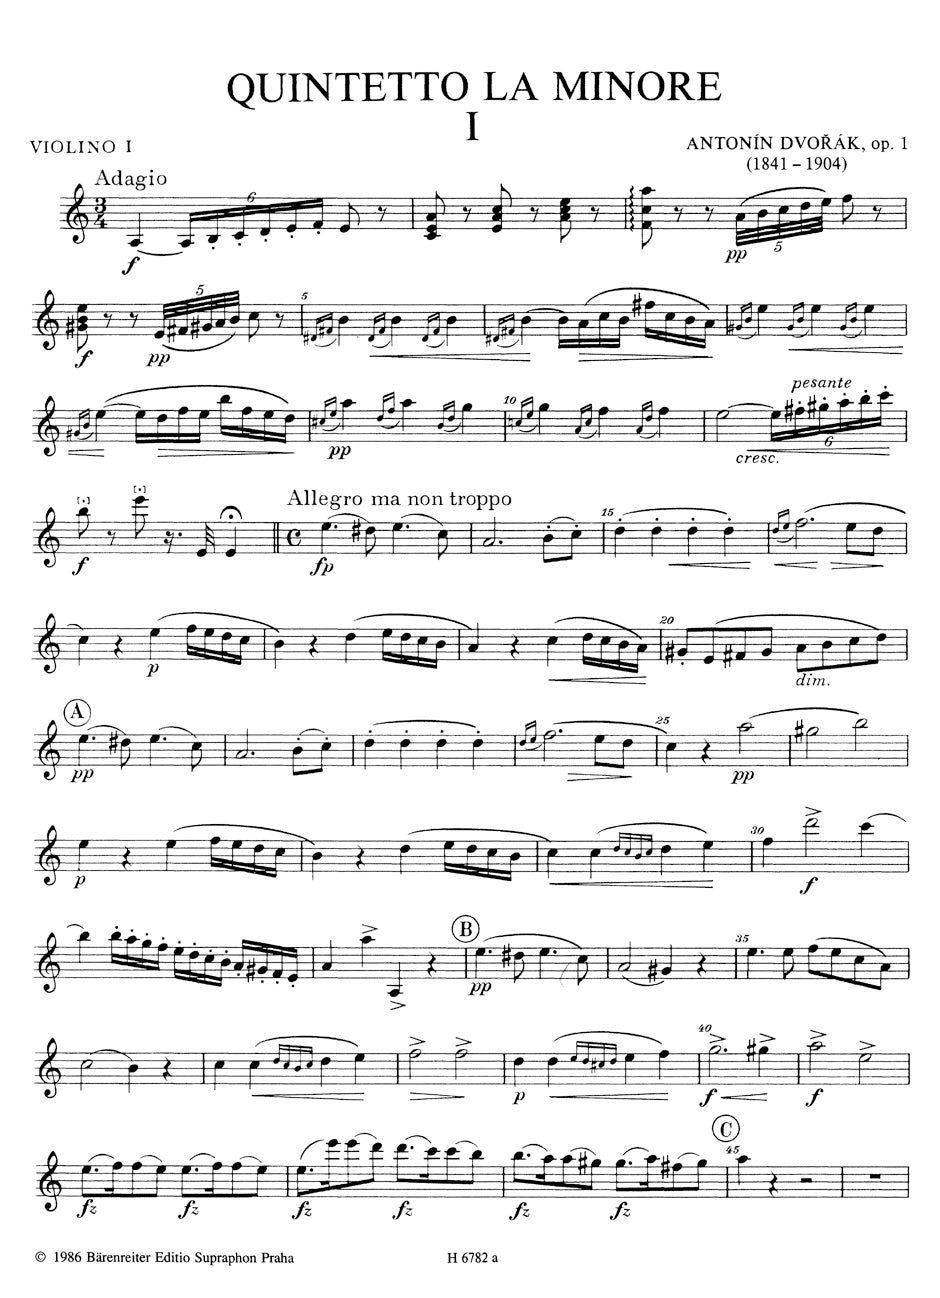 Dvorak String Quintet in a minor Opus 1